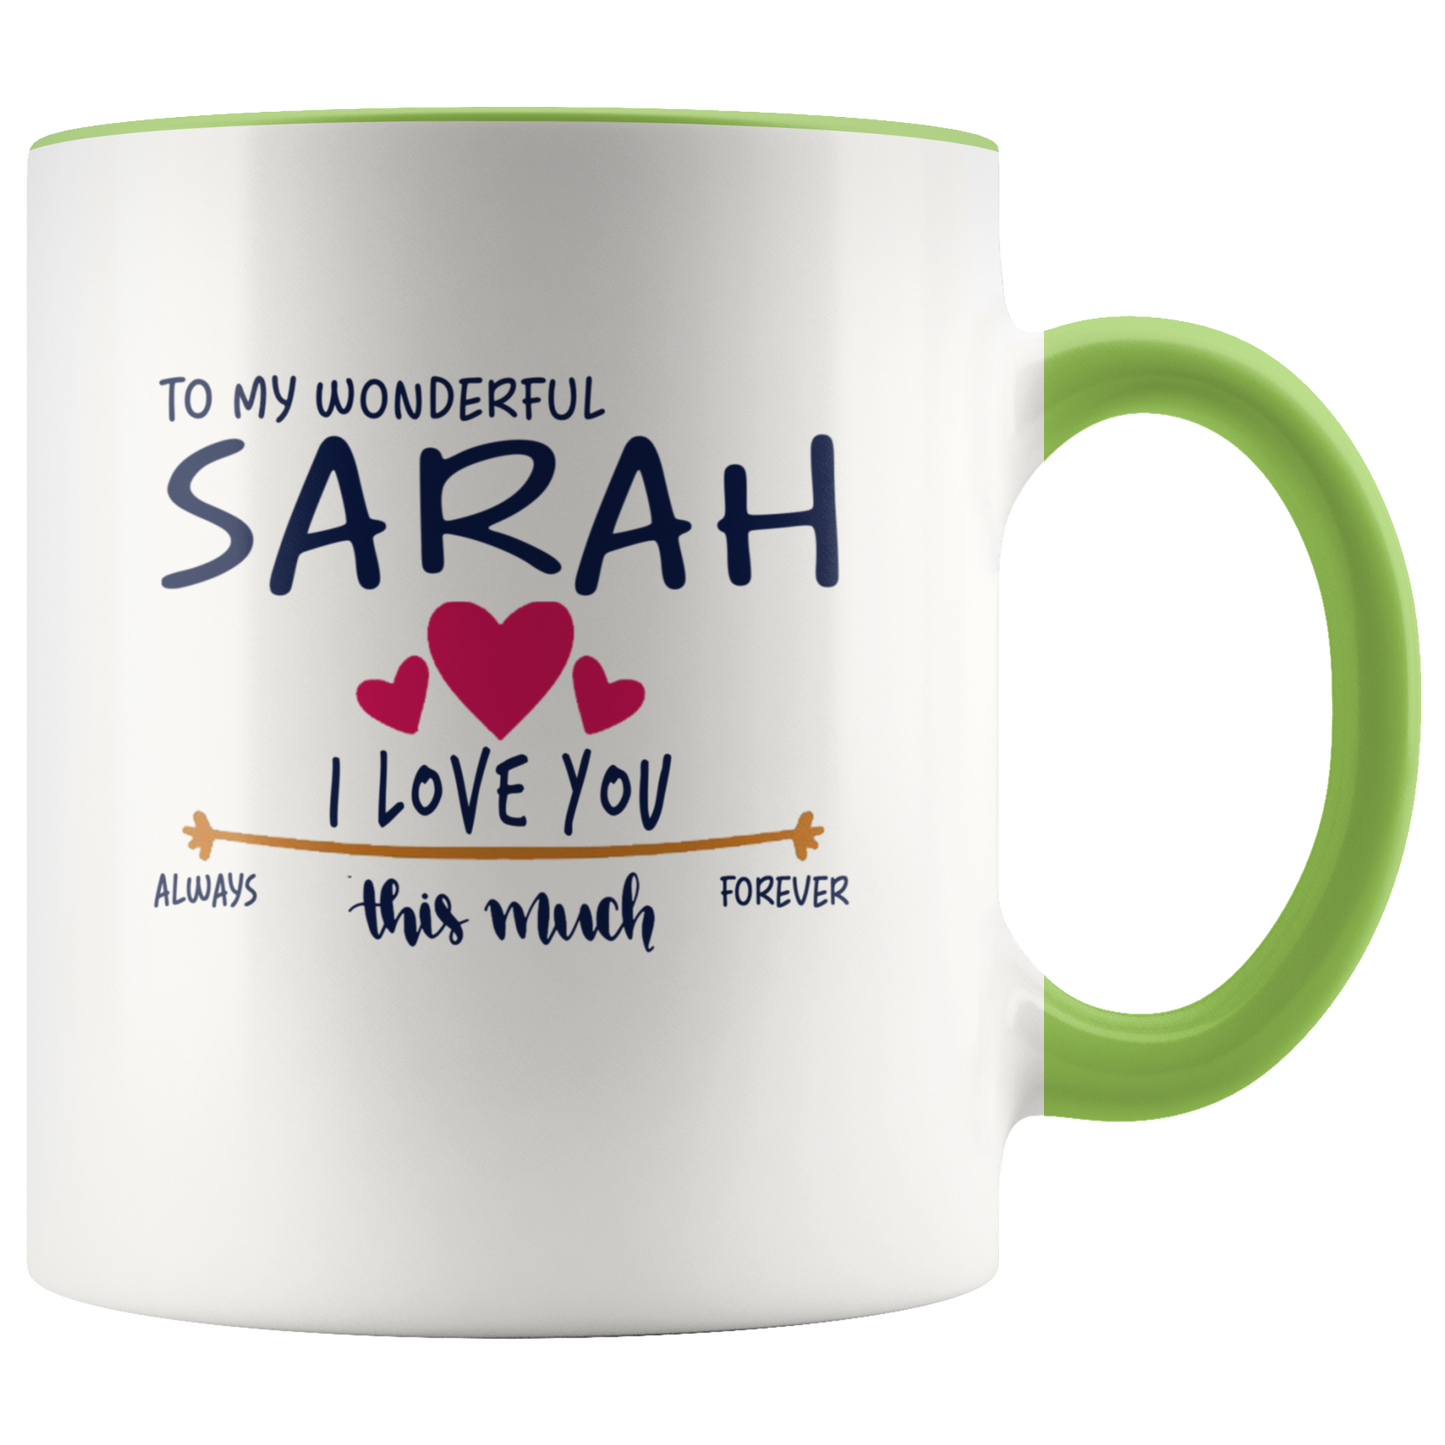 M-21258935-sp-22731 - Valentines Day Coffee Mug With Name Sarah - To My Wonderful